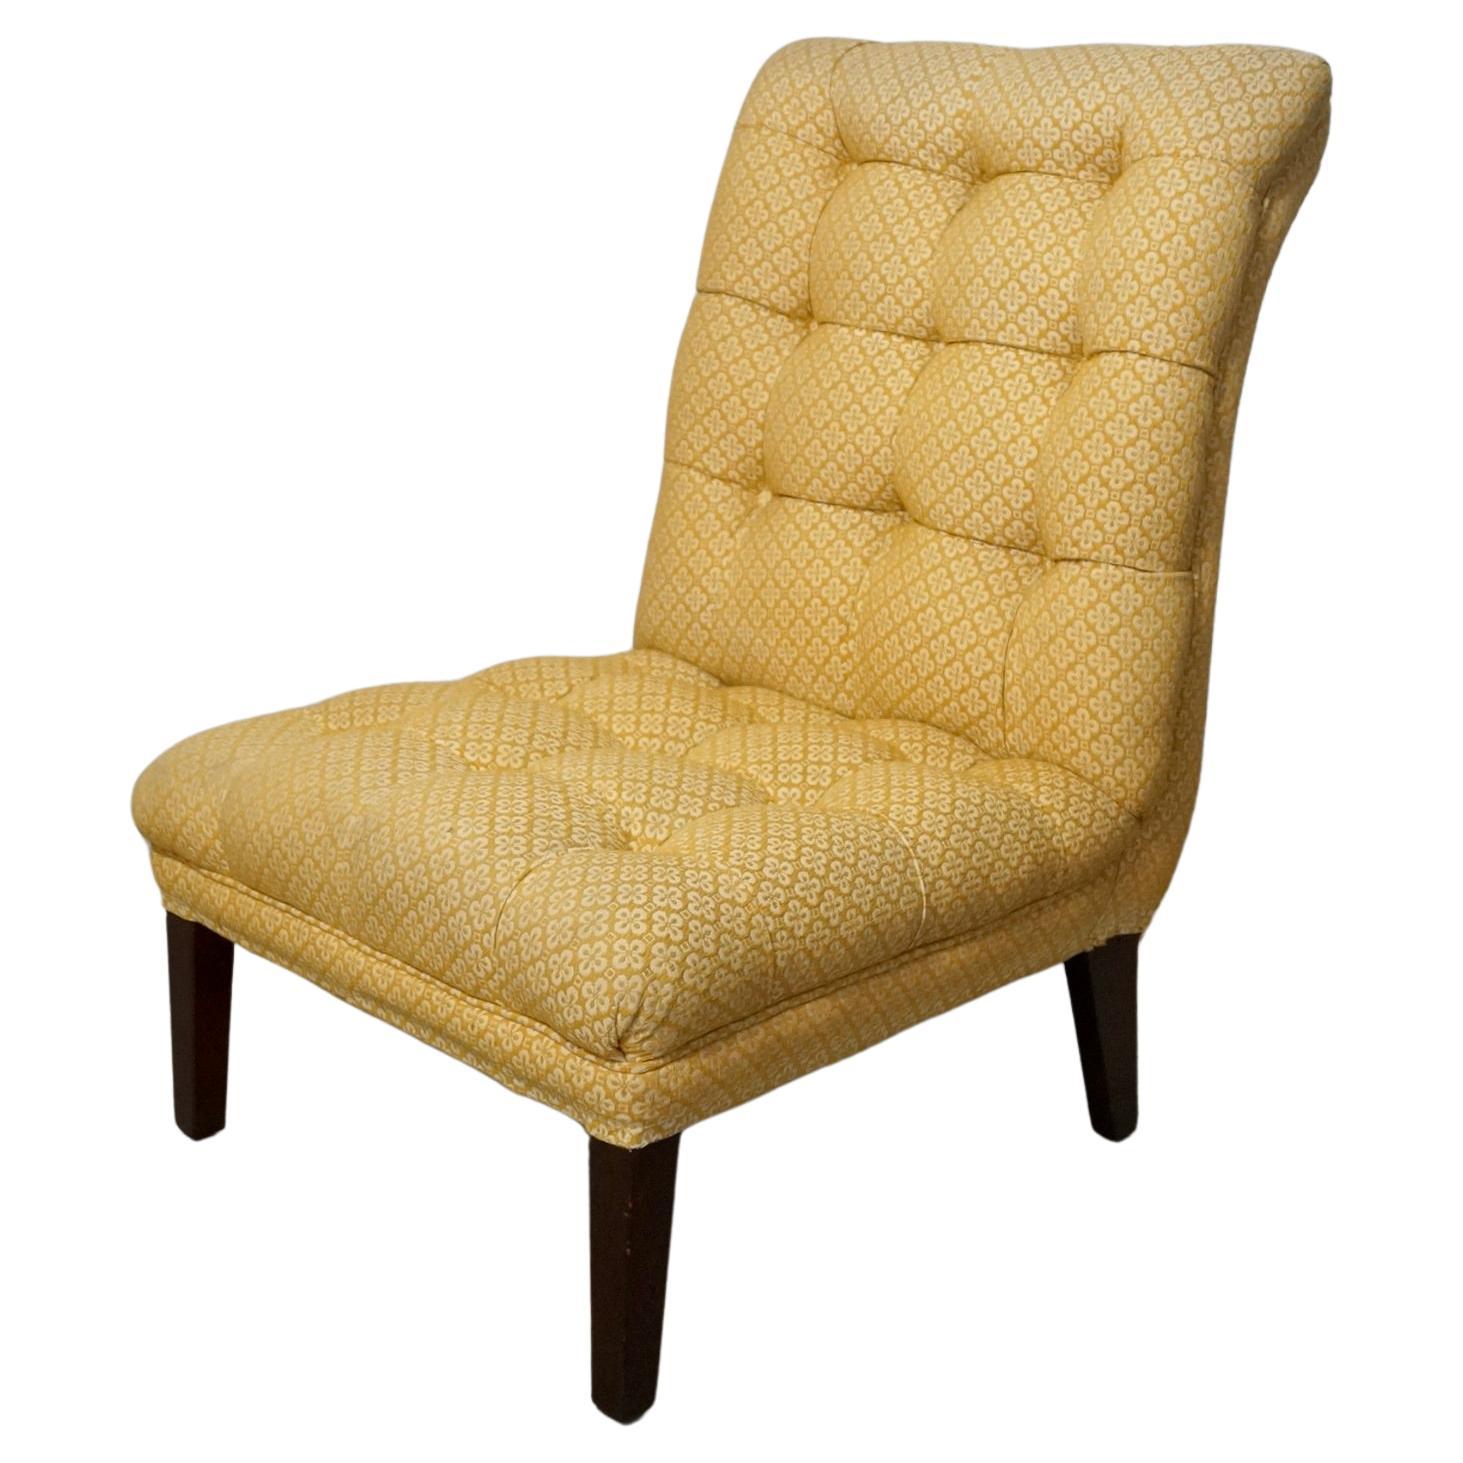 1960's Maison Jansen Style Scoop Slipper Lounge Chair For Sale